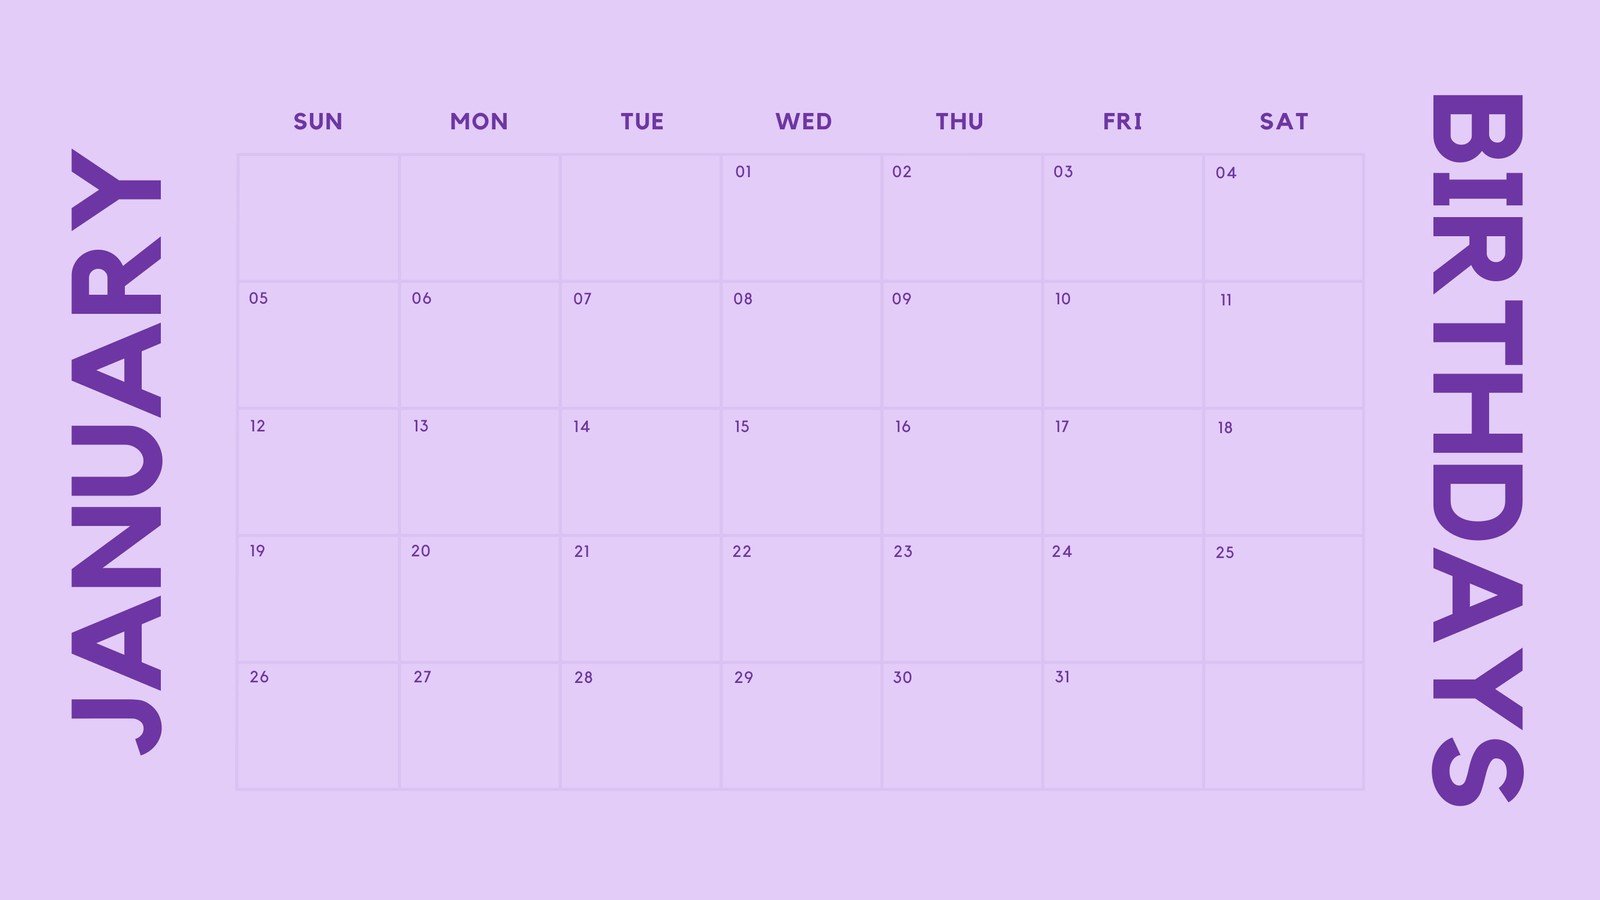 Free, printable, customizable birthday calendar templates Canva